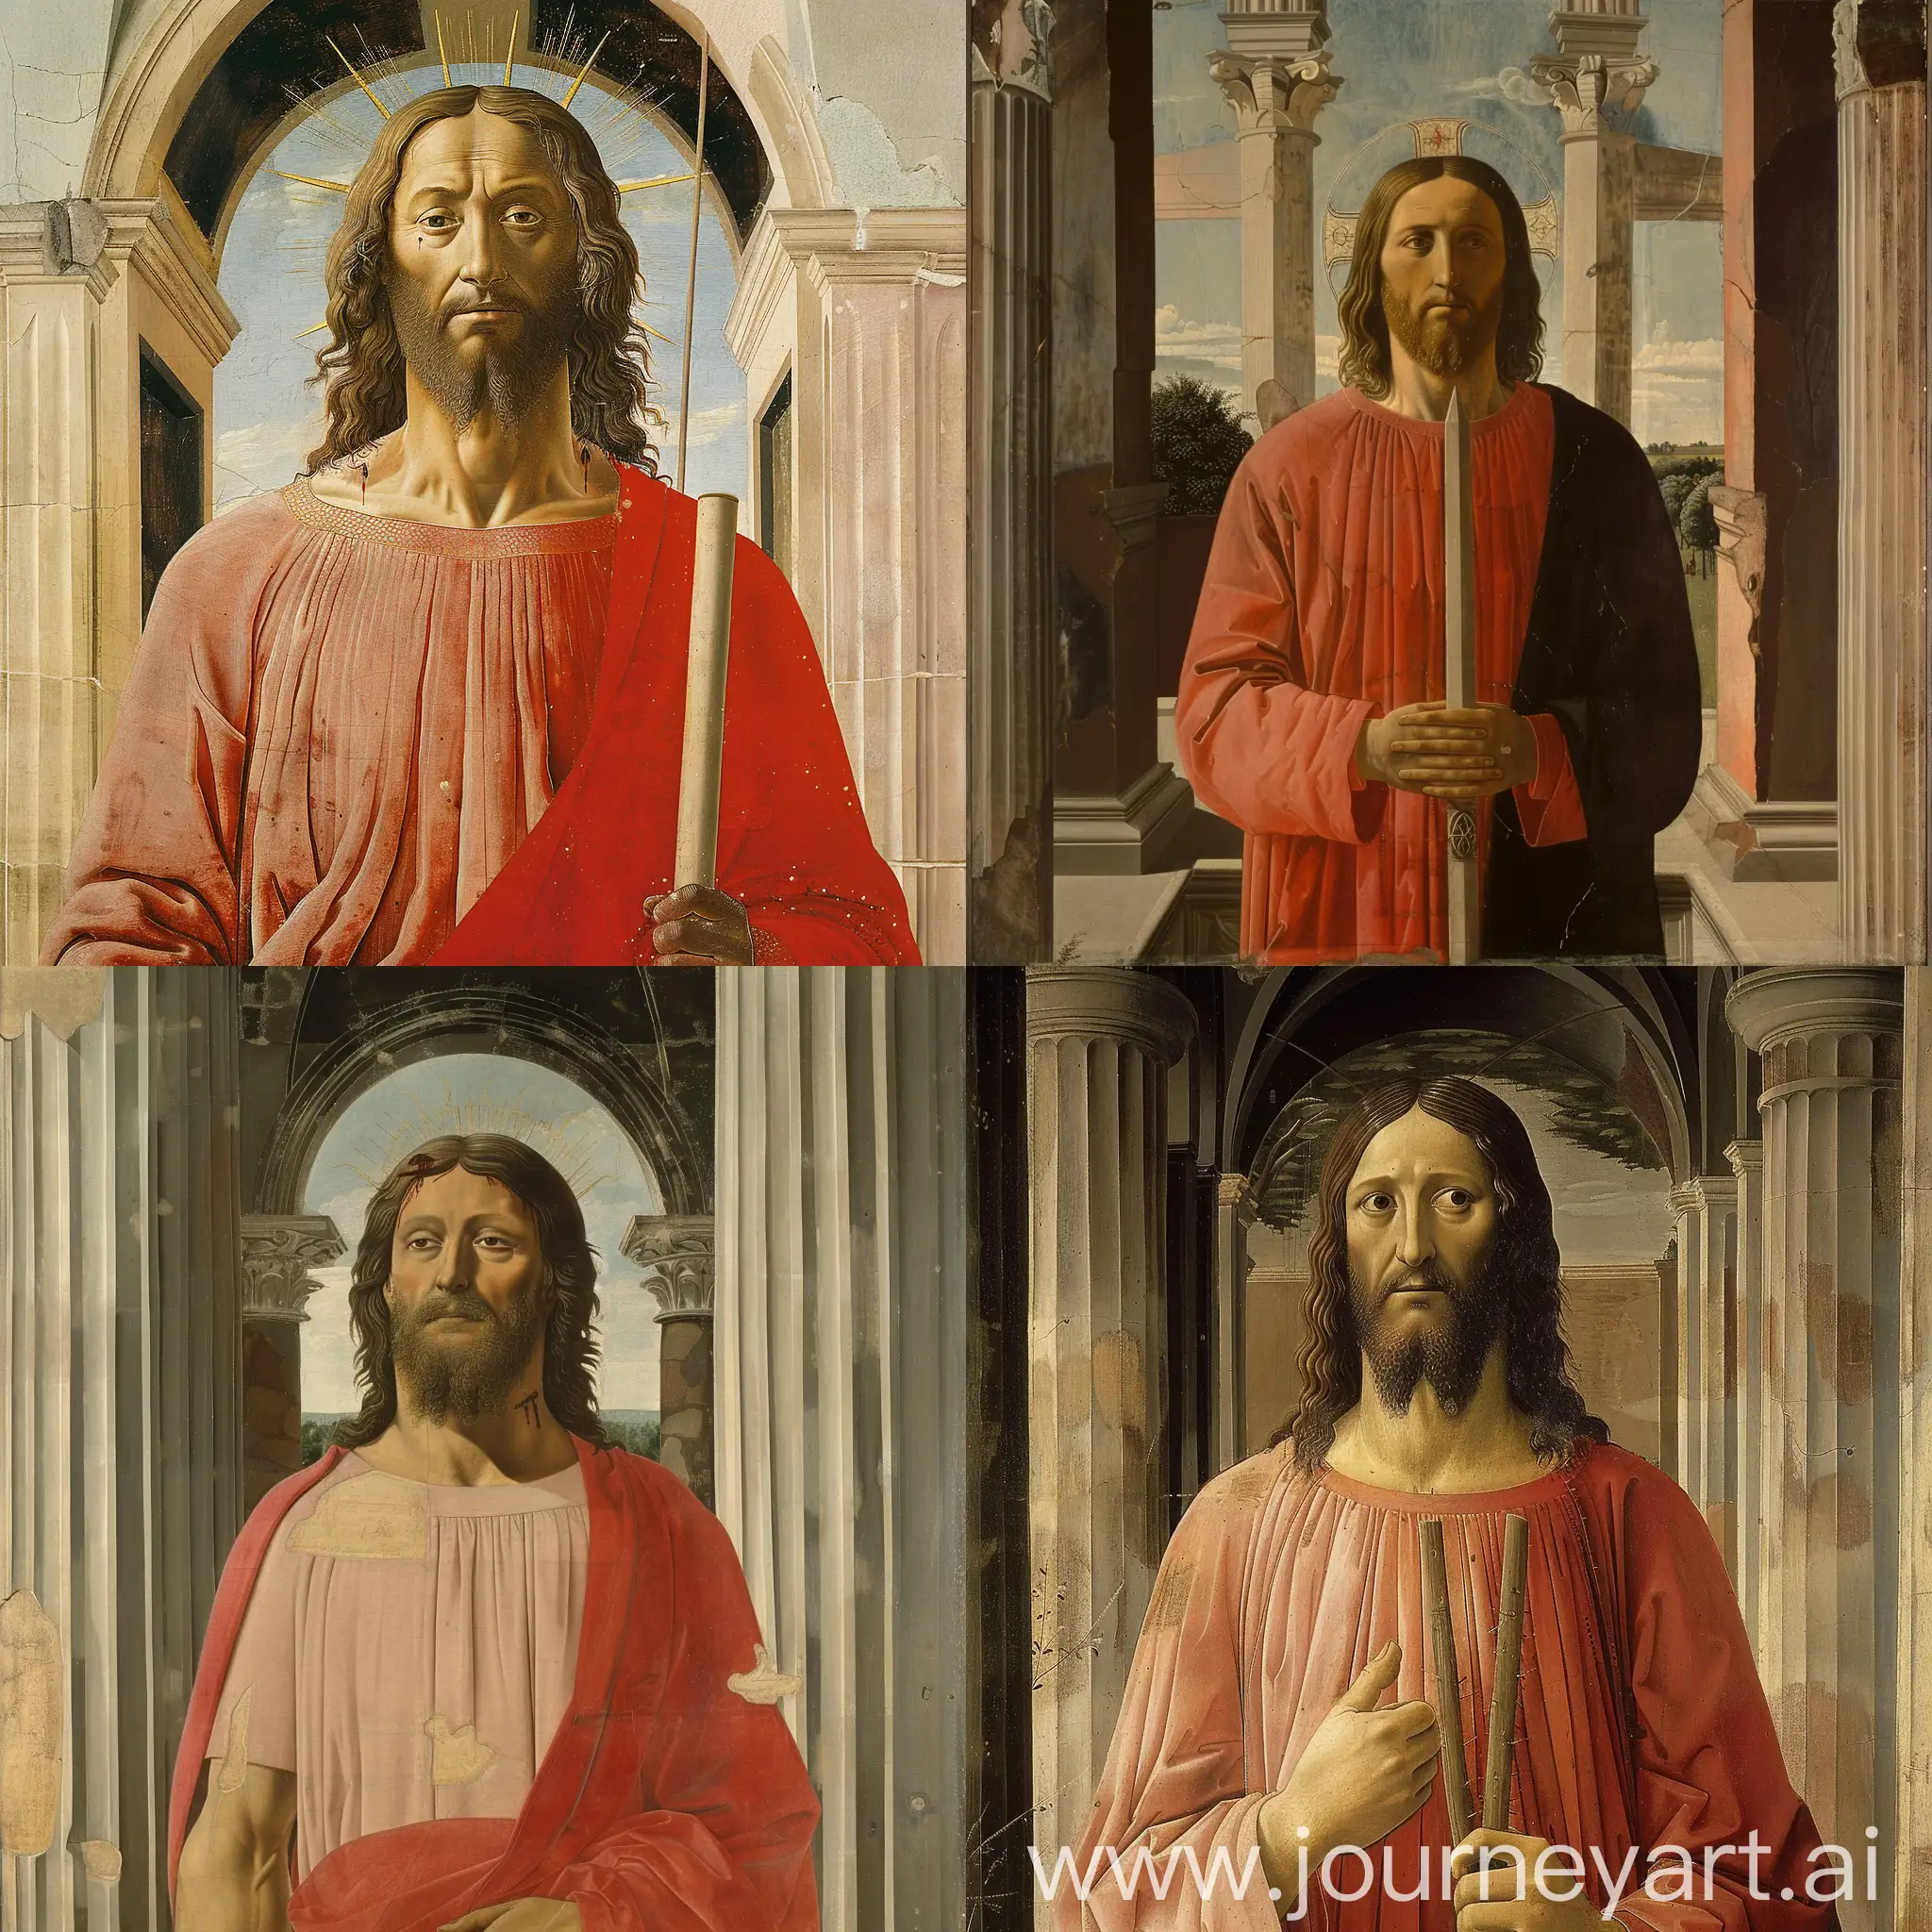 Jesus-Christ-in-Piero-della-Francesca-Style-Painting